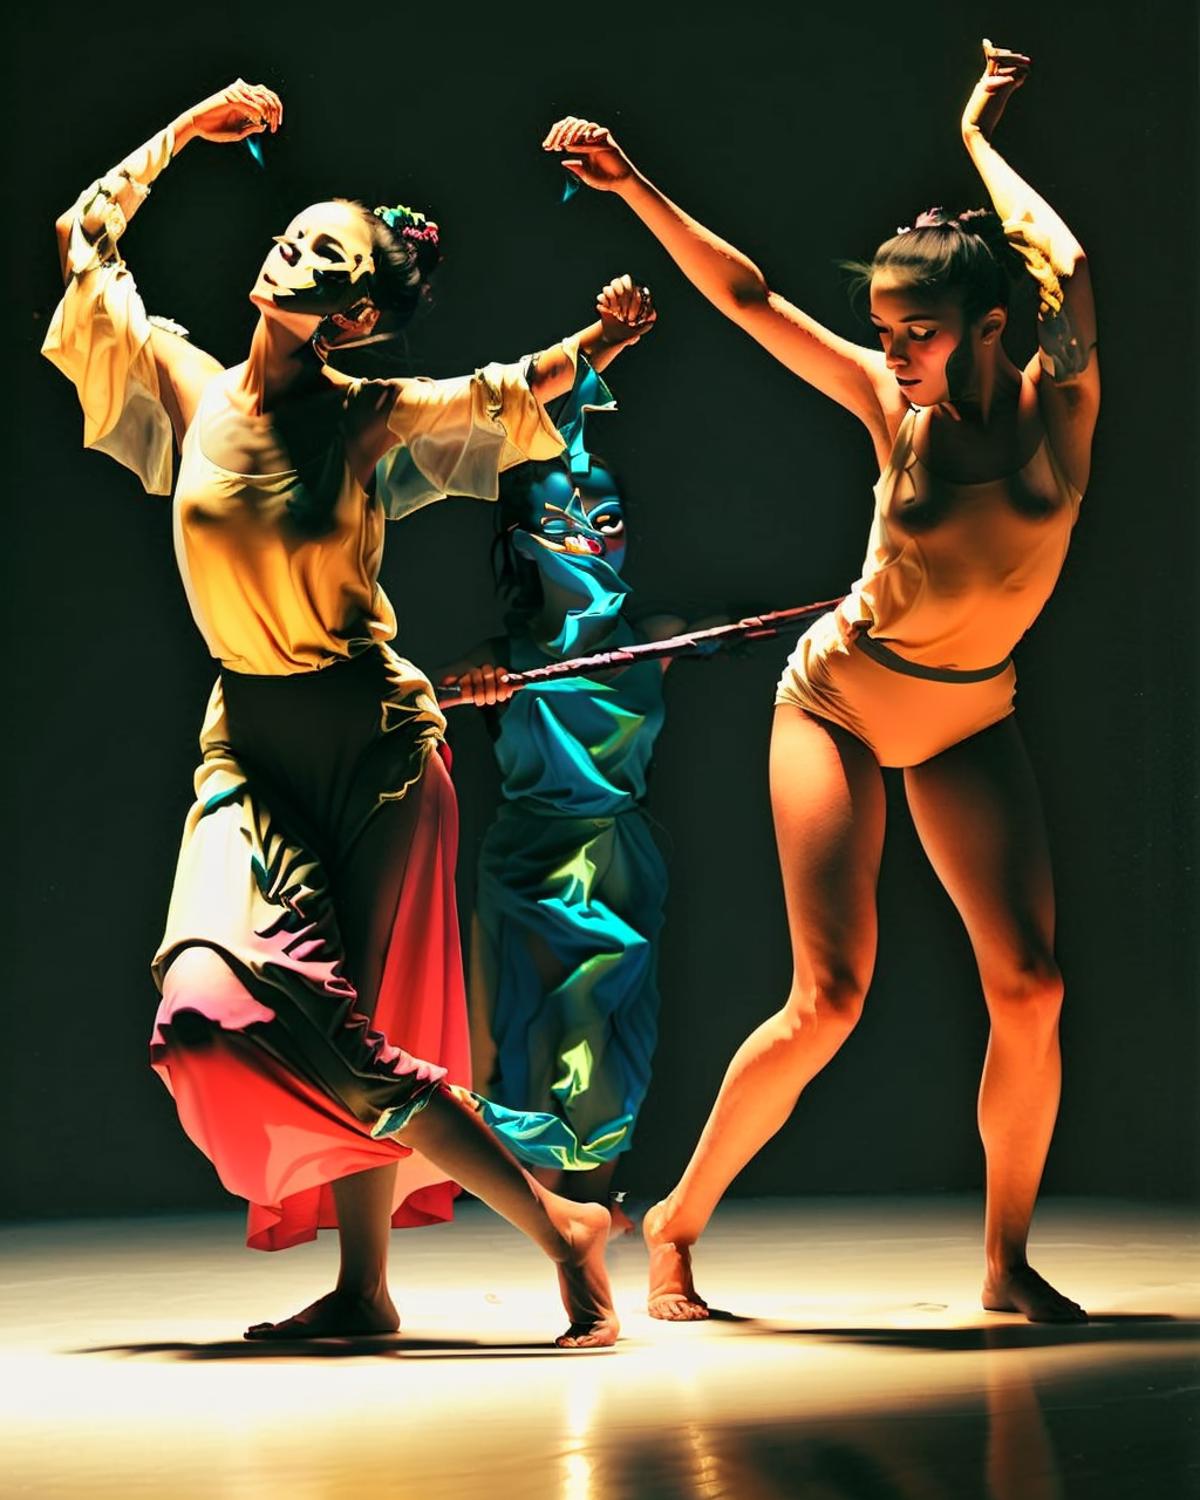 Dance Art image by Ciro_Negrogni